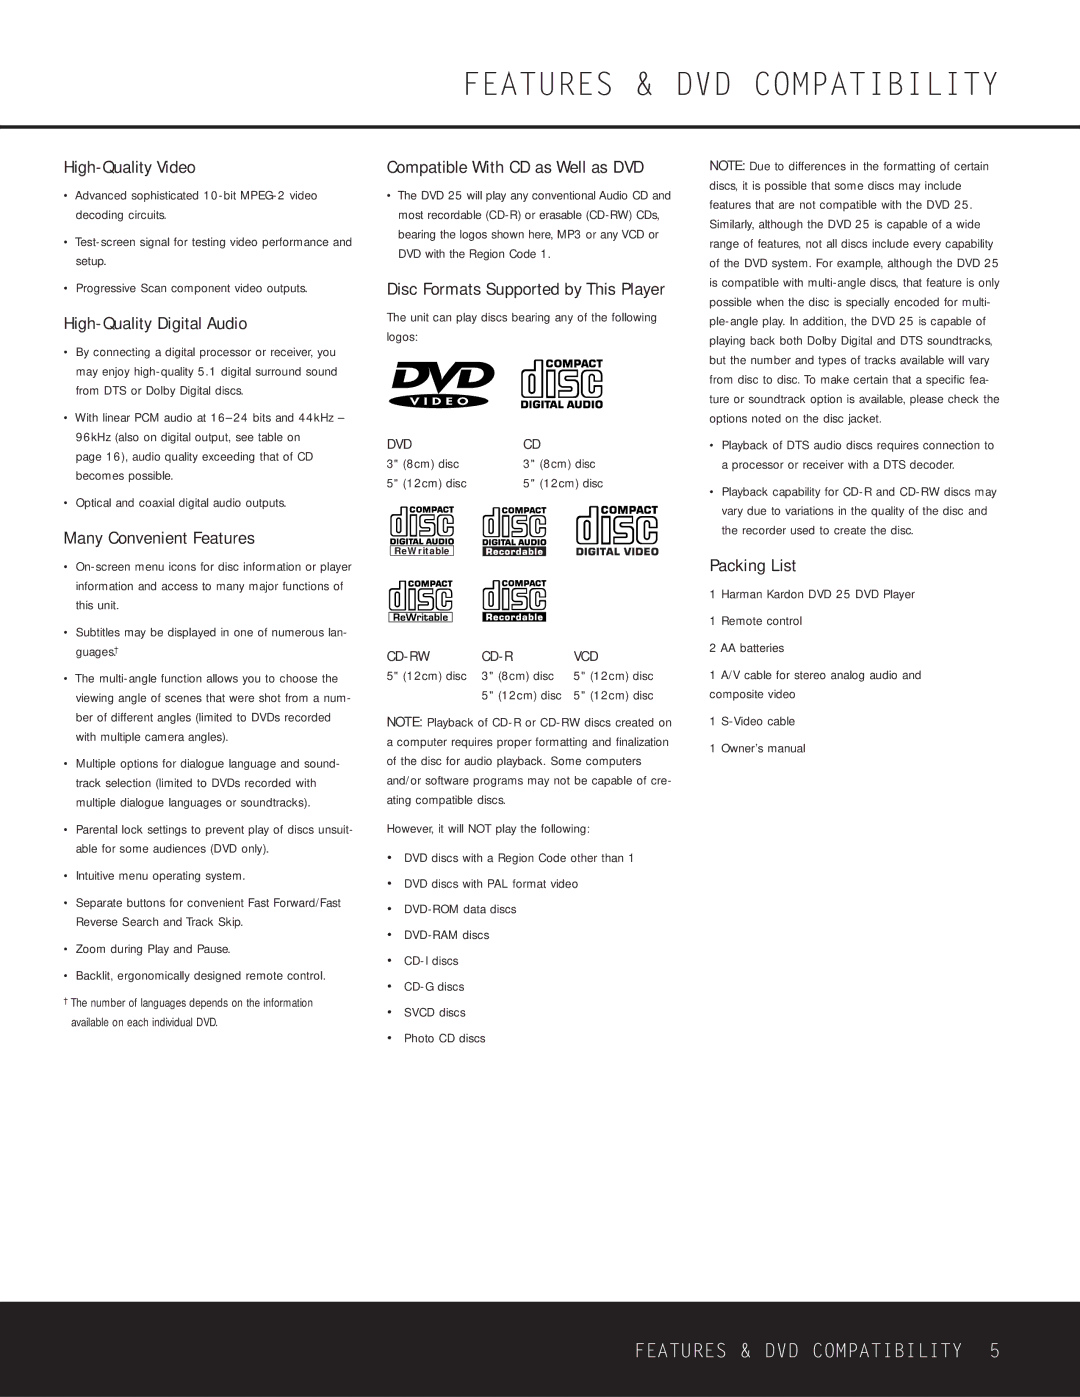 Harman-Kardon DVD 25 Features & DVD Compatibility, High-Quality Video, High-Quality Digital Audio, Packing List 